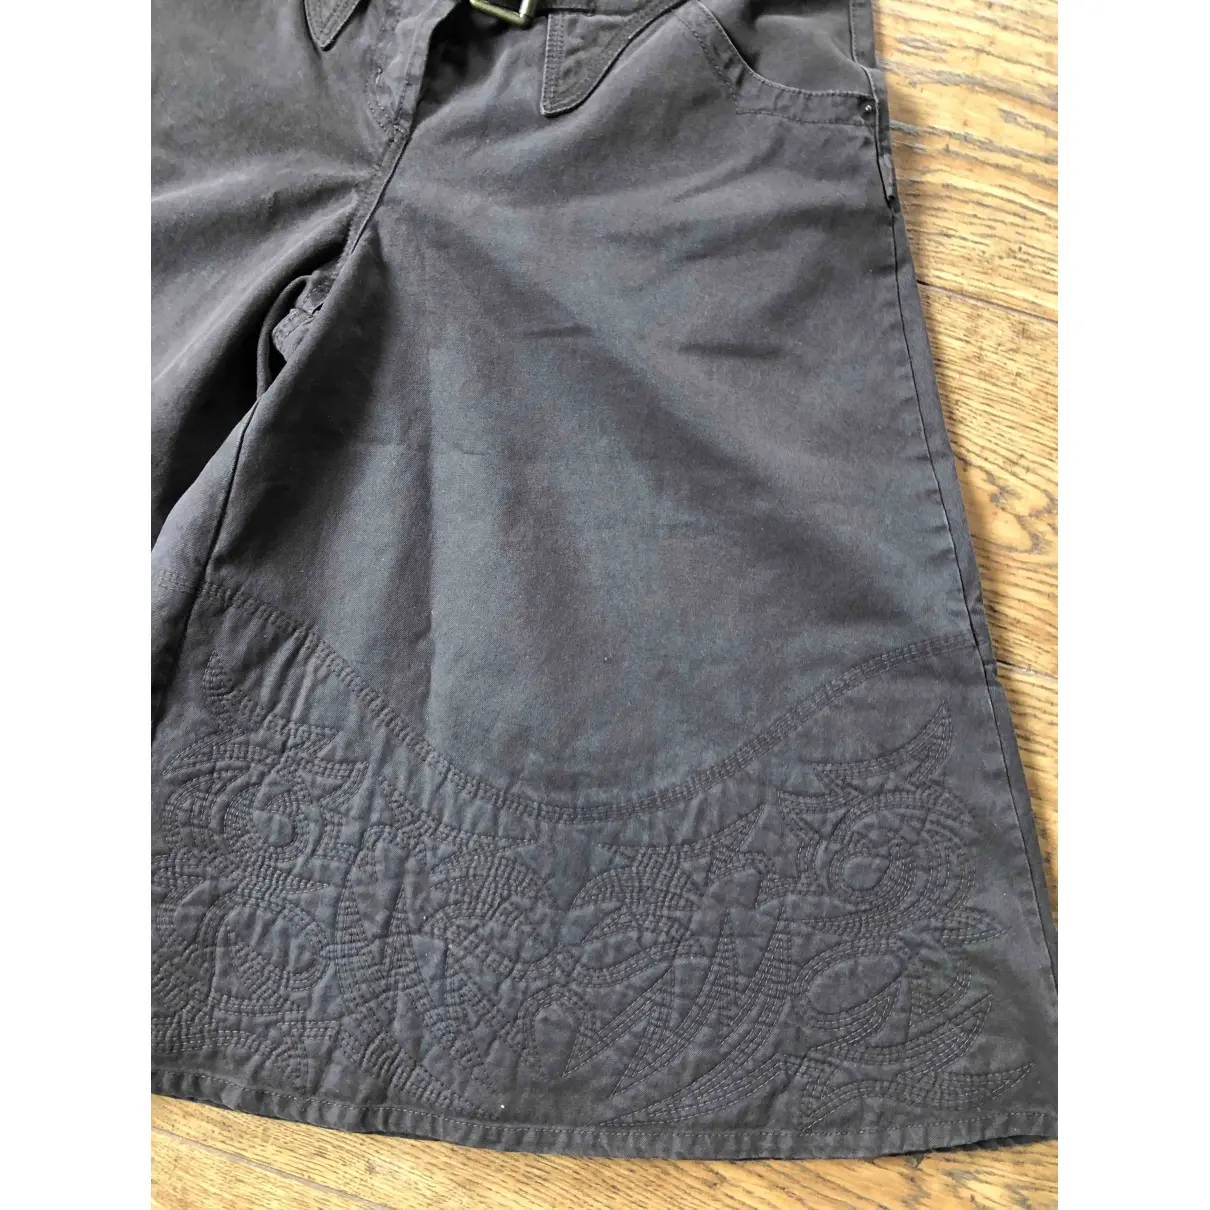 Buy Jean Paul Gaultier Brown Cotton Shorts online - Vintage